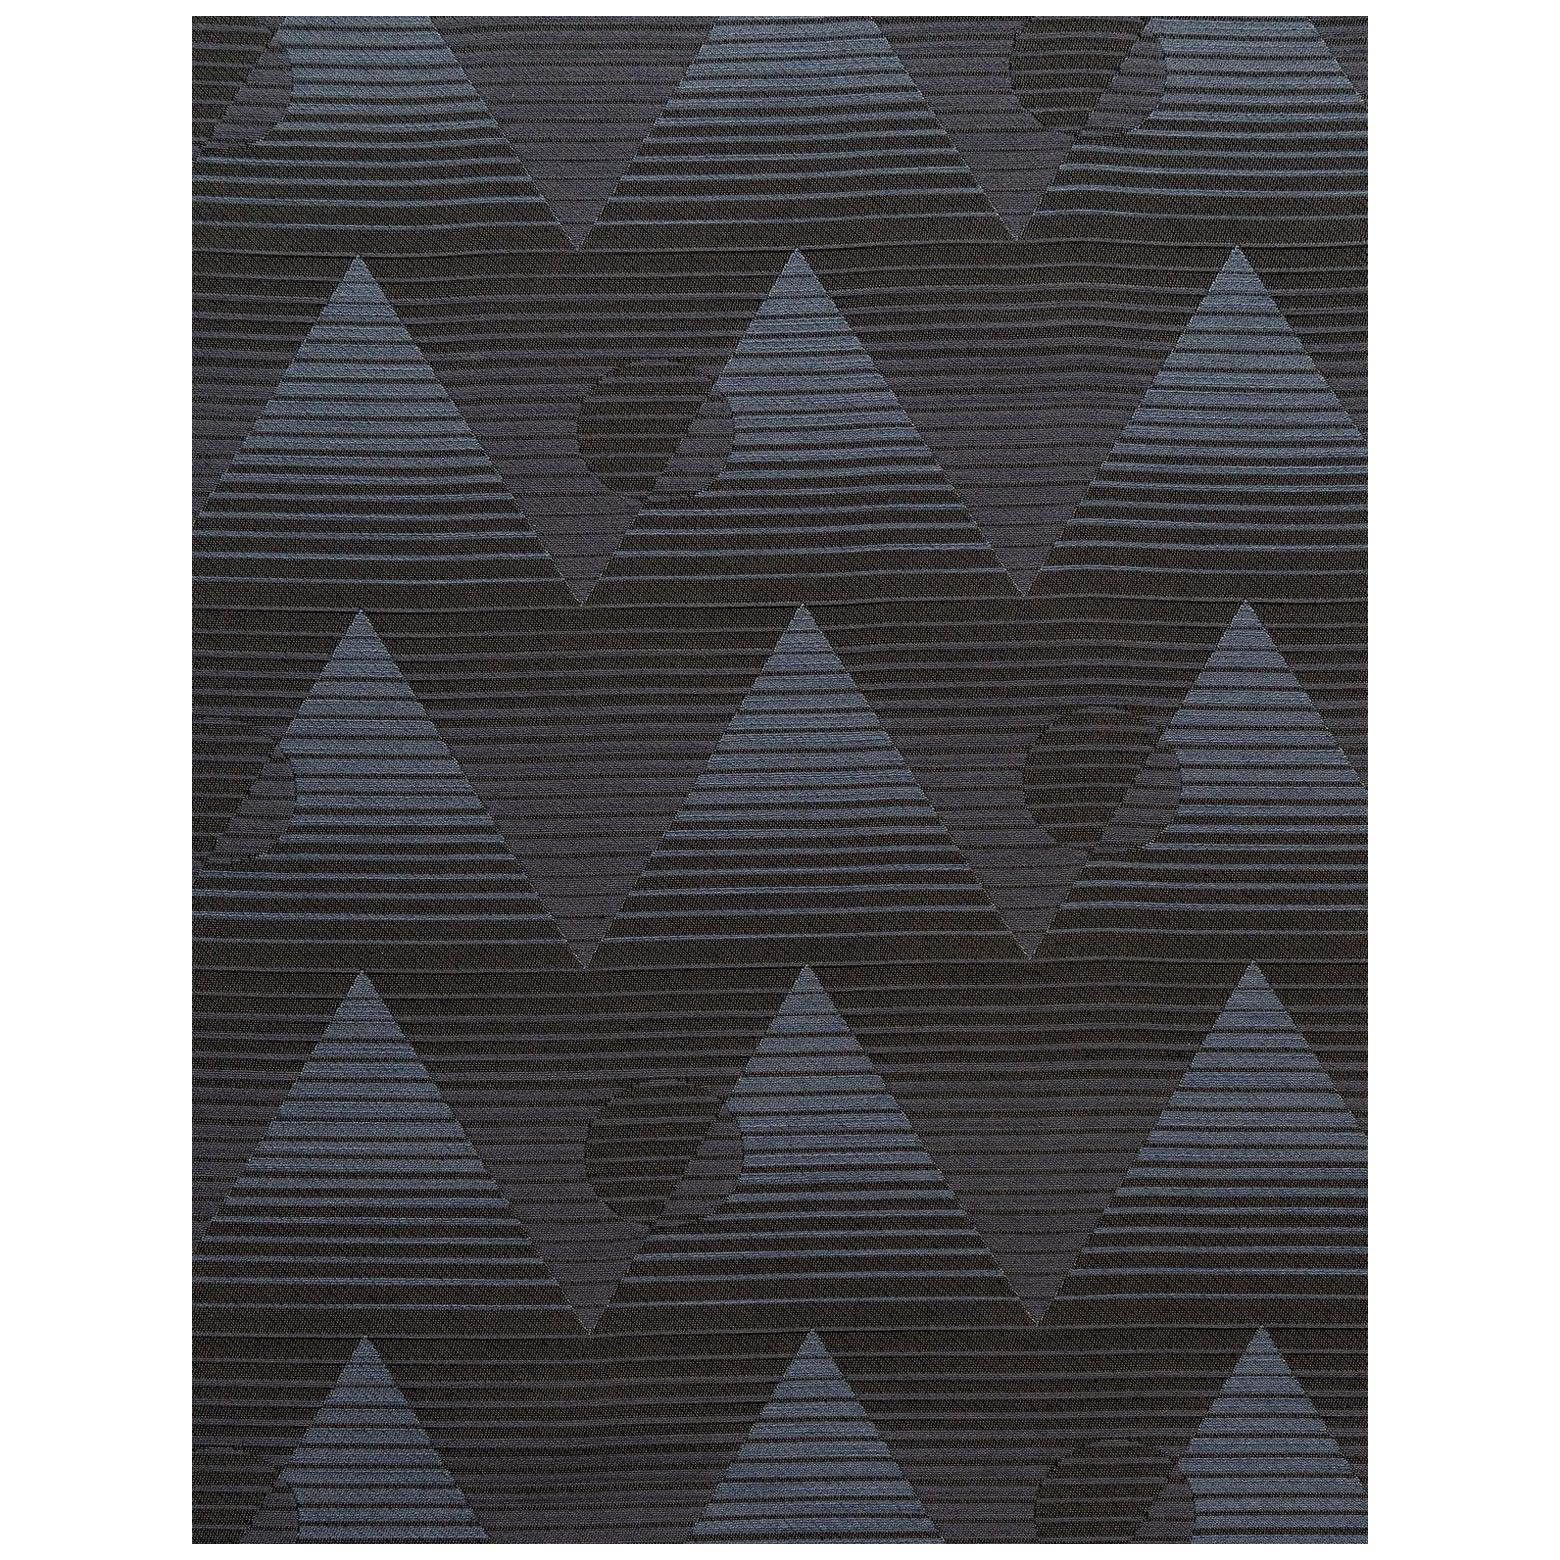 Pyramide du Soleil Woven Commercial Grade Fabric in Dorado, Black and Navy